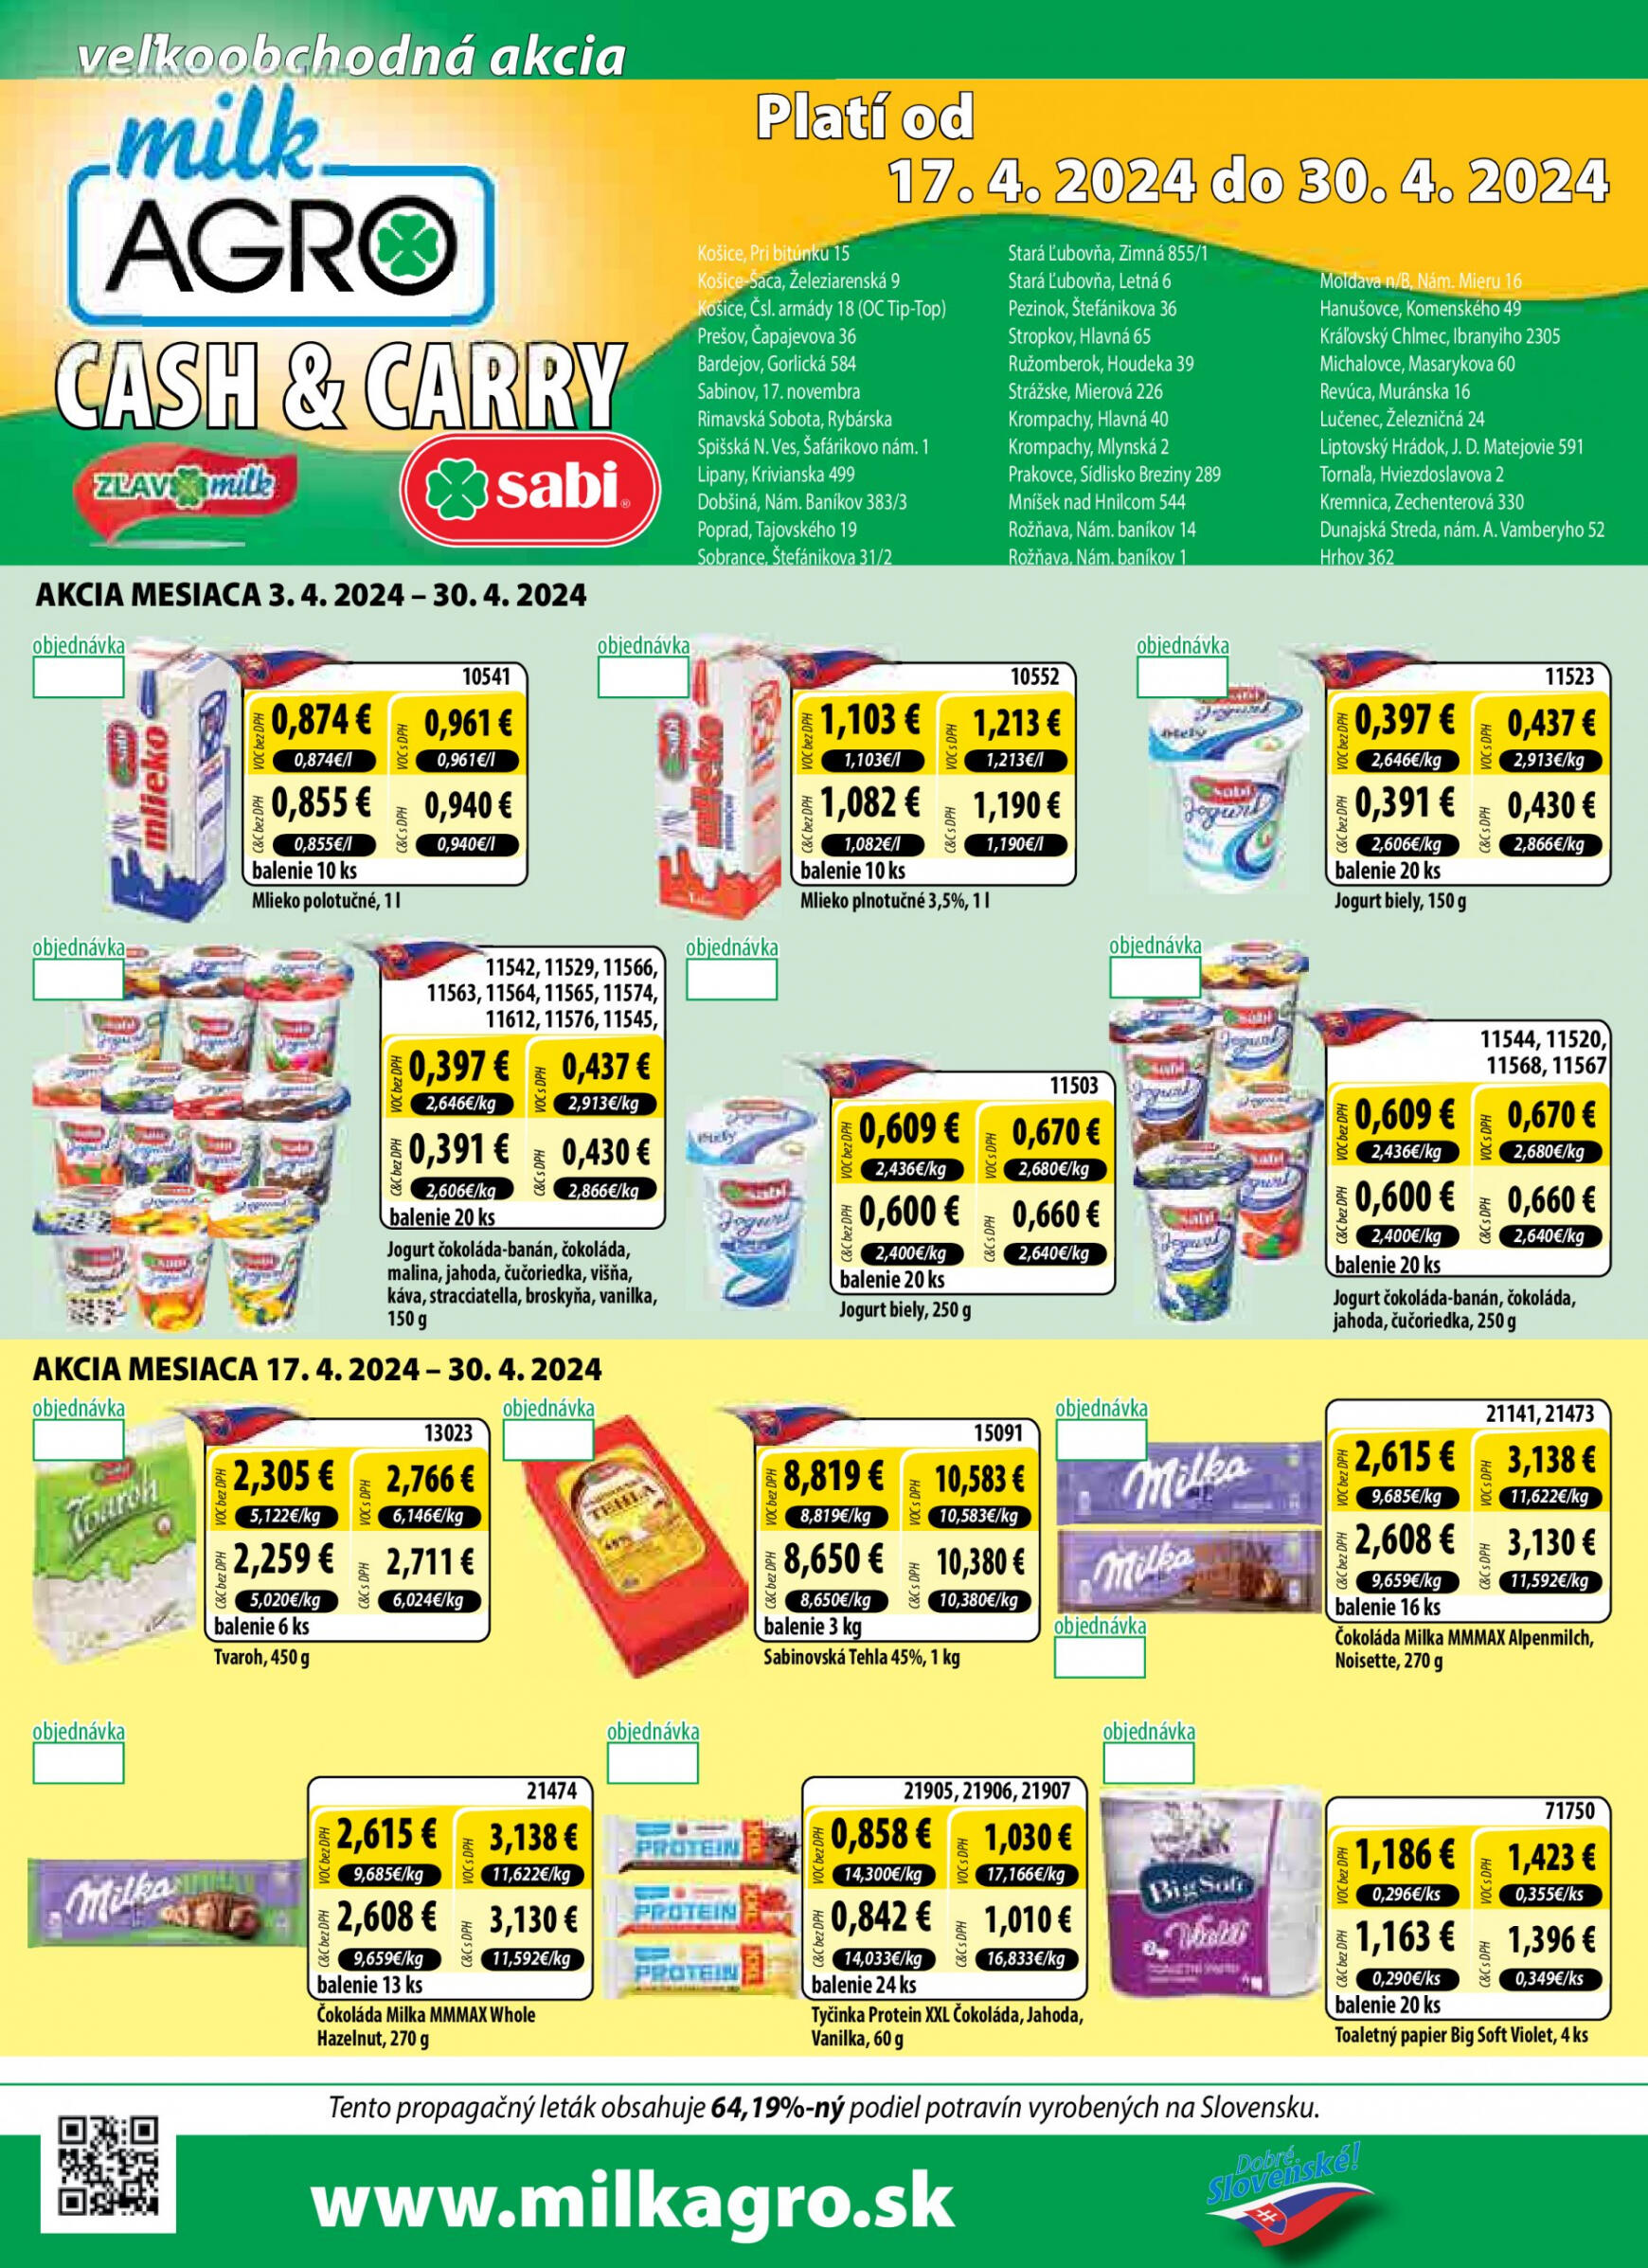 milk-agro - Milk Agro - Cash & Carry leták platný od 17.04. - 30.04.